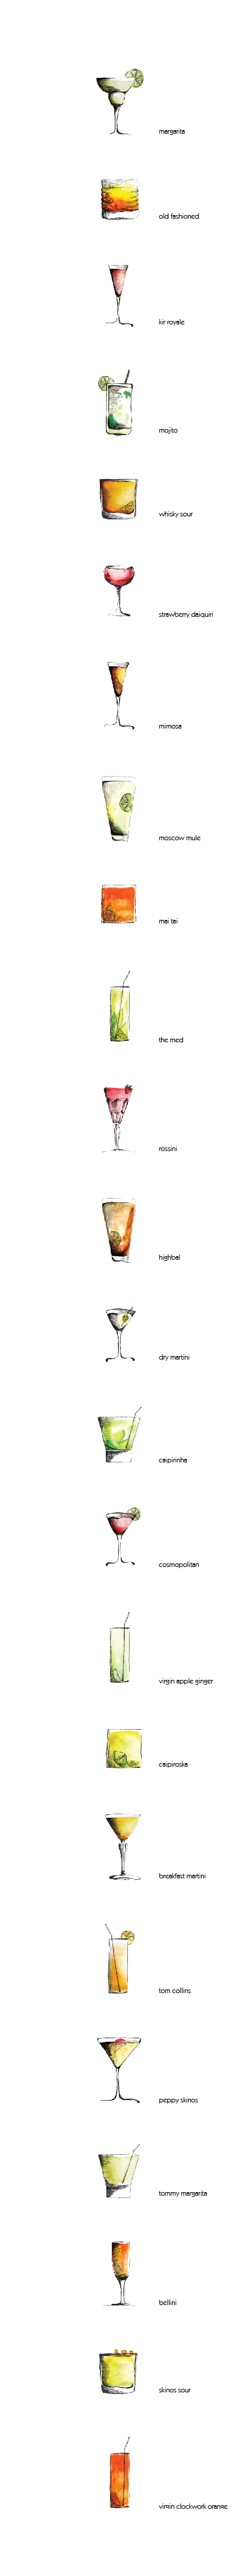 cocktail illustration design mojito margarita jar Icon drink glass pen watercolor handmade lemon straw spirit